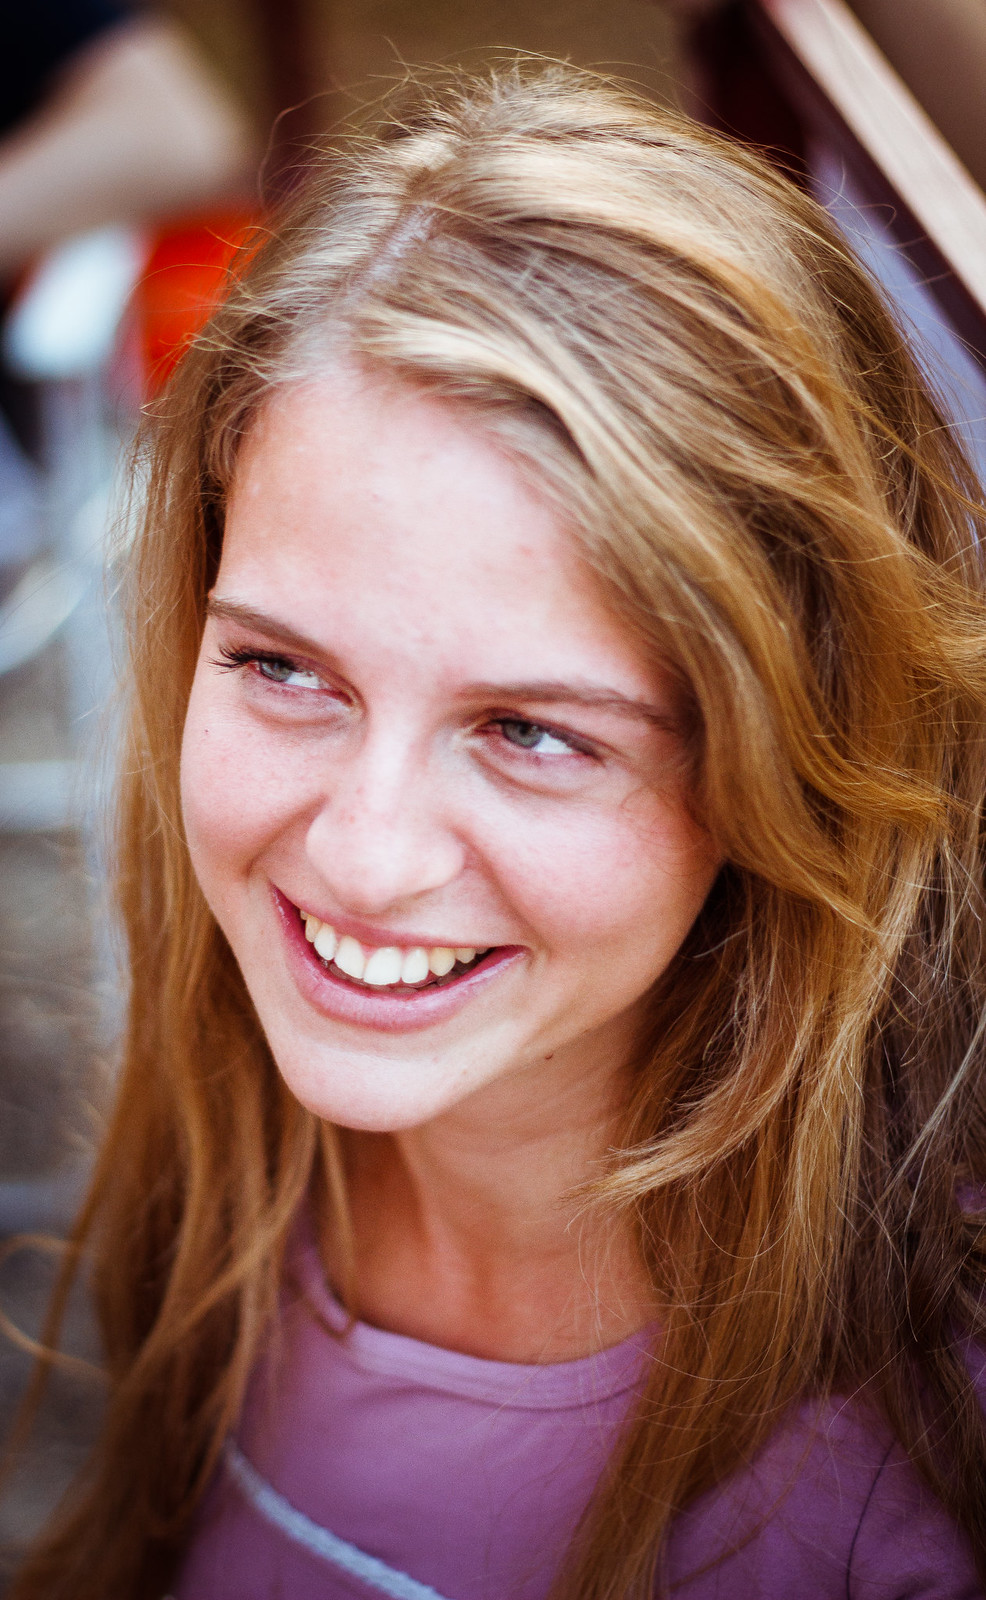 Jelena portrait girl picture smiling blond